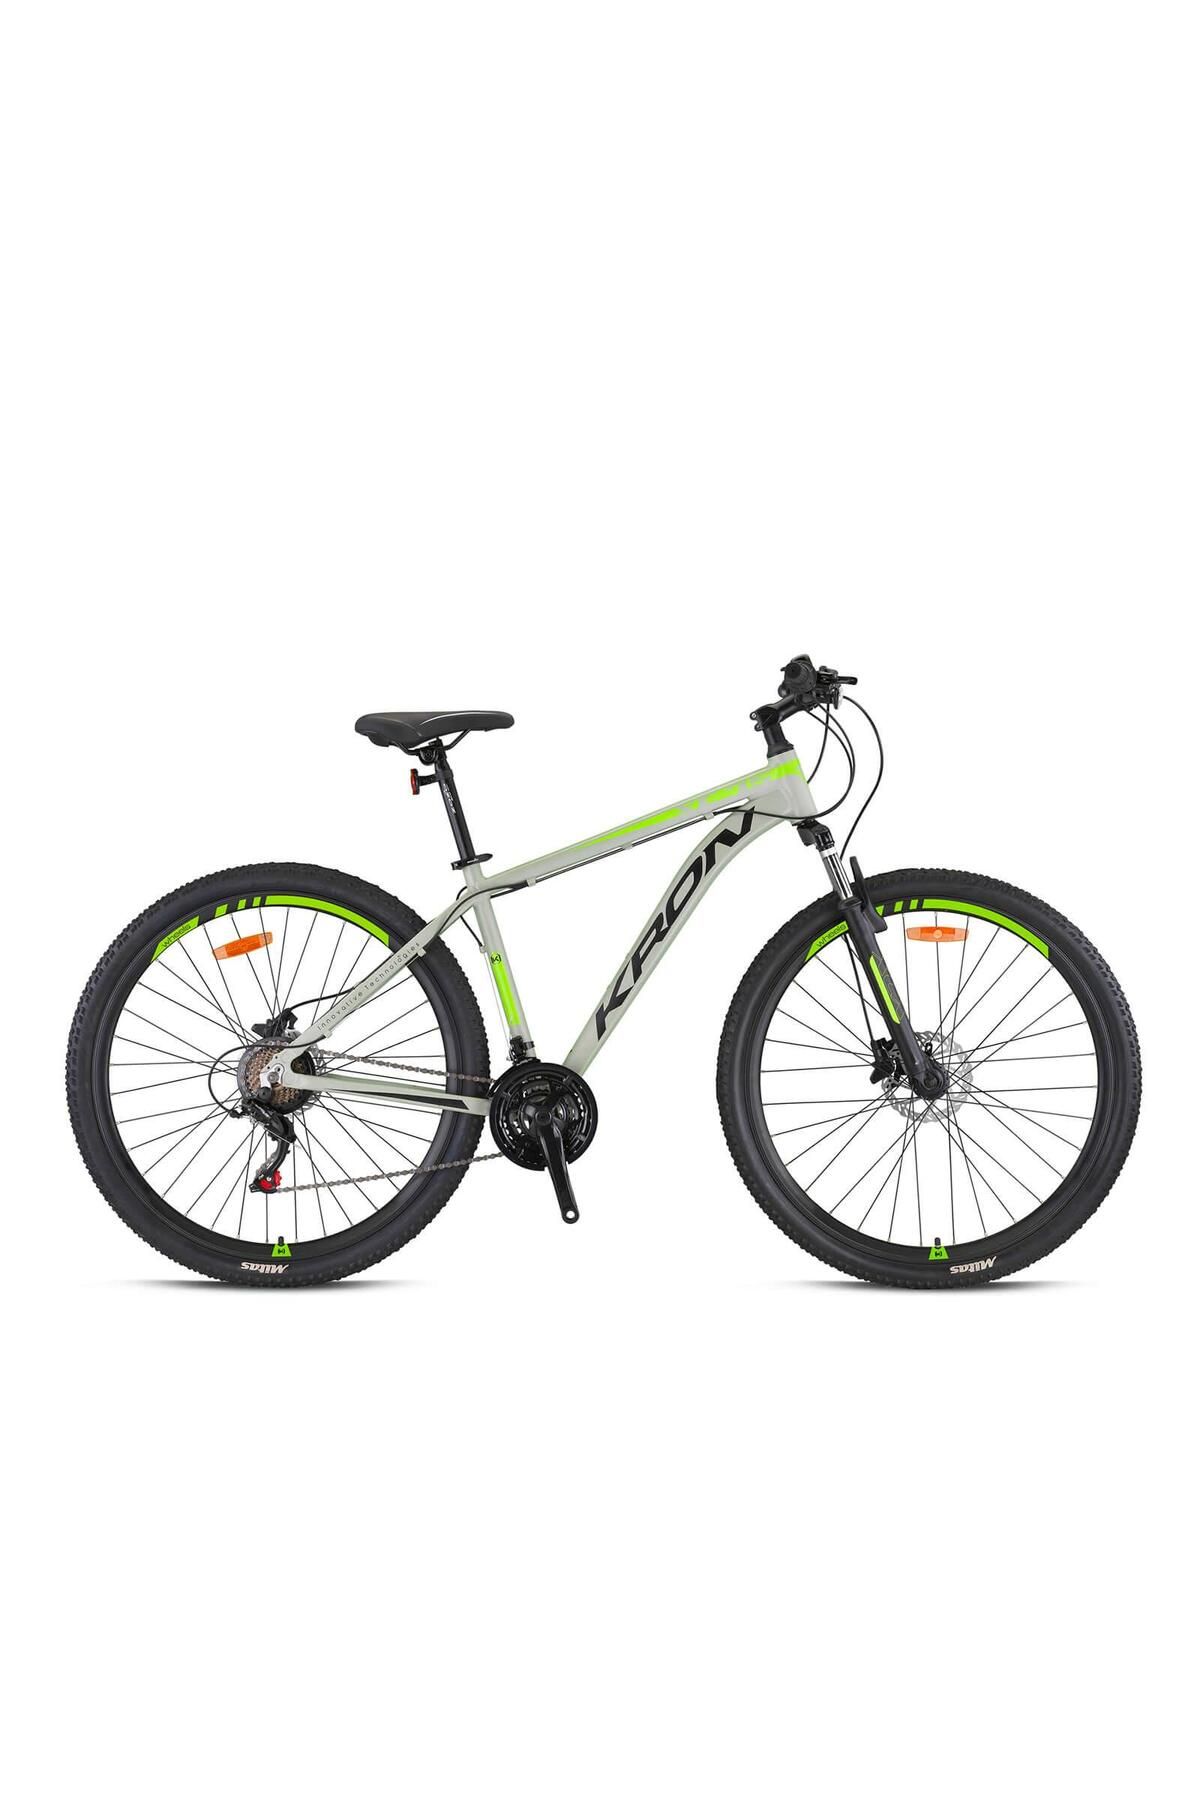 Kron Xc 75 27.5" Jant Hd 21 Vites Dağ Bisikleti 19 Kadro Mat Füme Neon Sarı Siyah